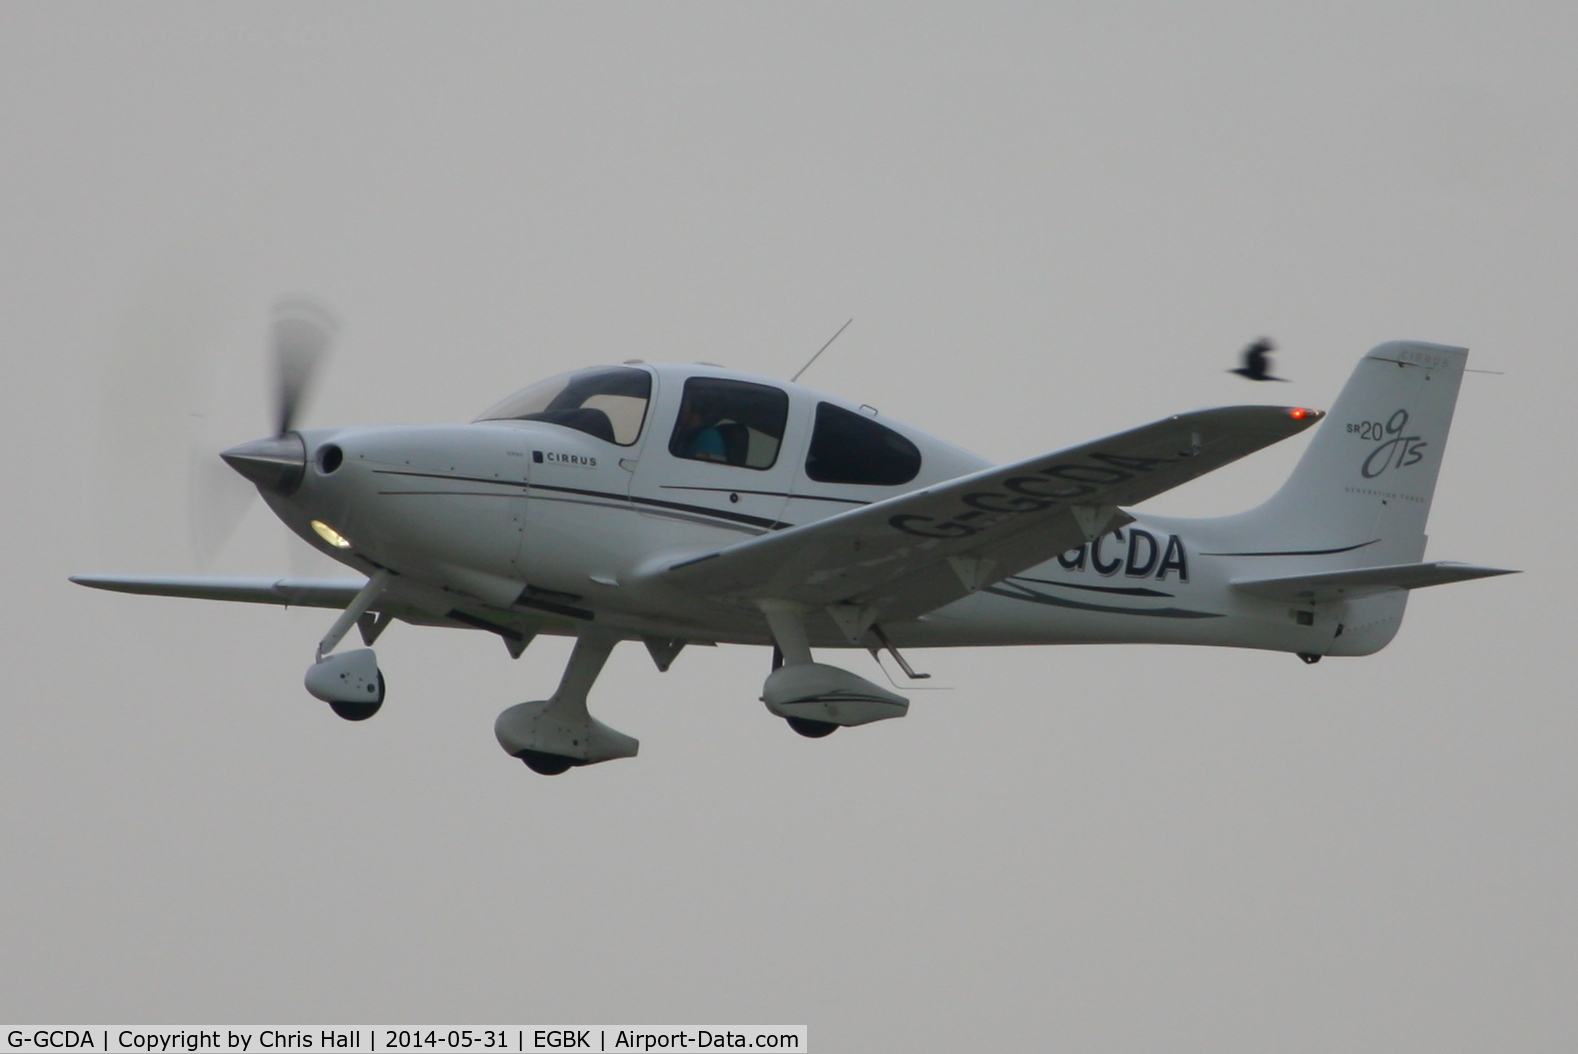 G-GCDA, 2008 Cirrus SR20 G3 GTS C/N 1962, at AeroExpo 2014